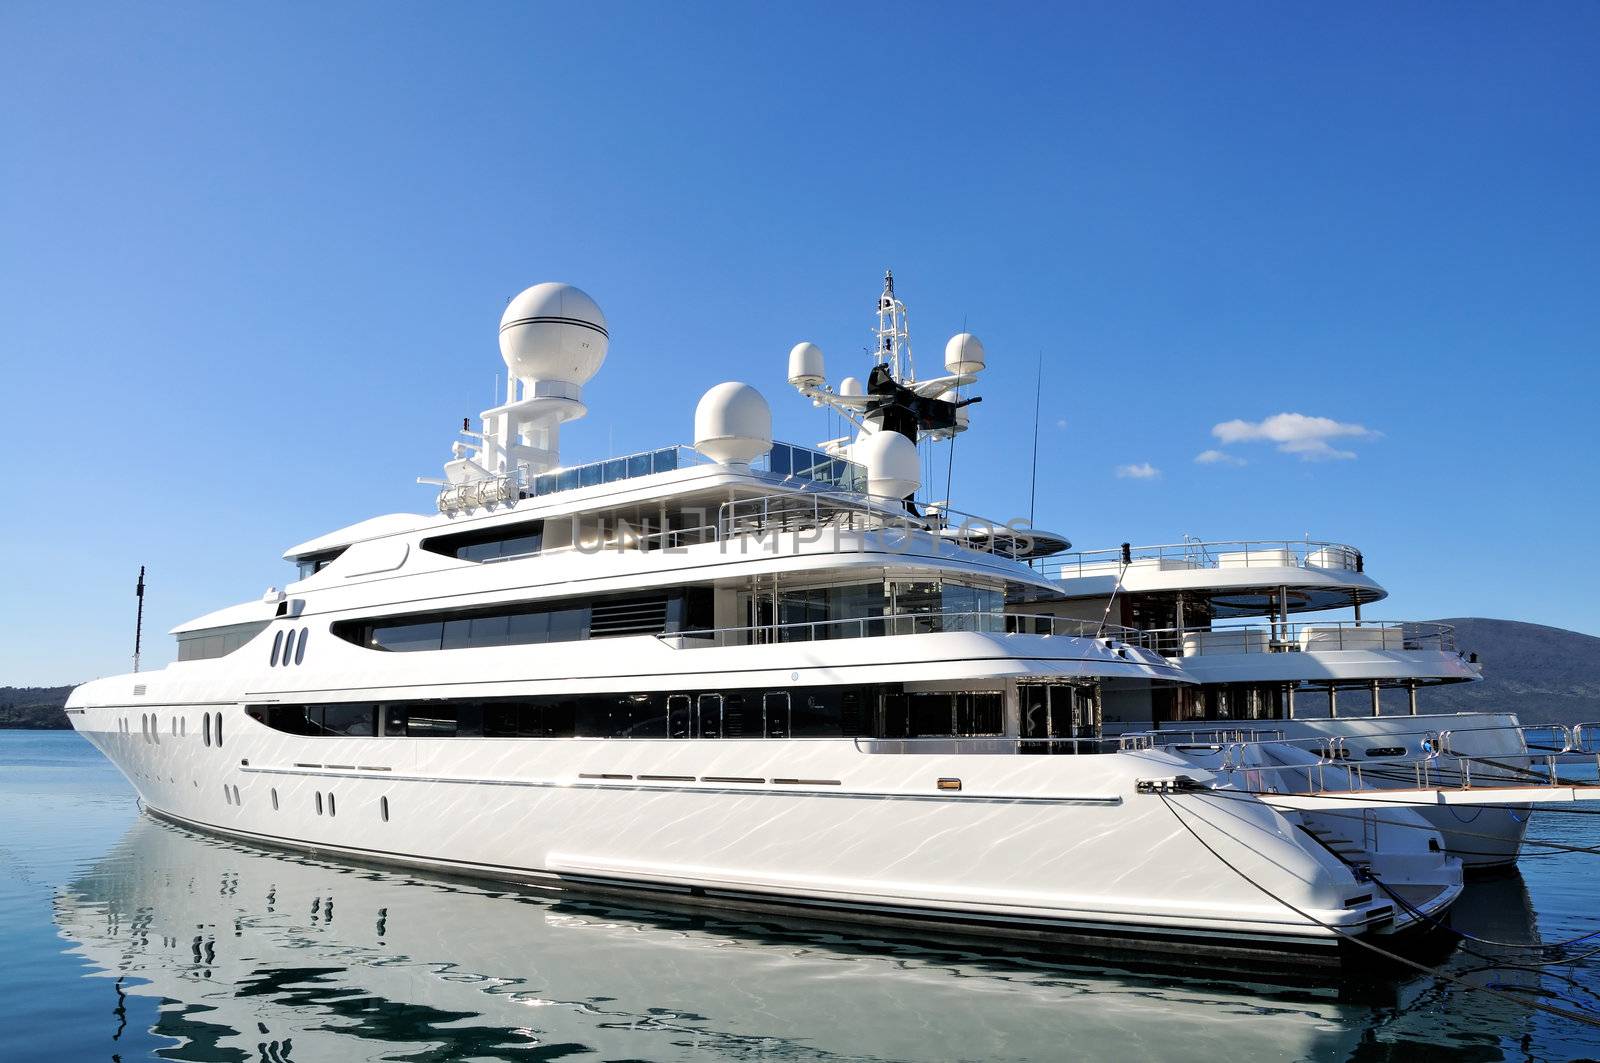 Large luxury yacht anchored at Porto Montenegro, Tivat. Bay of Boka kotorska.